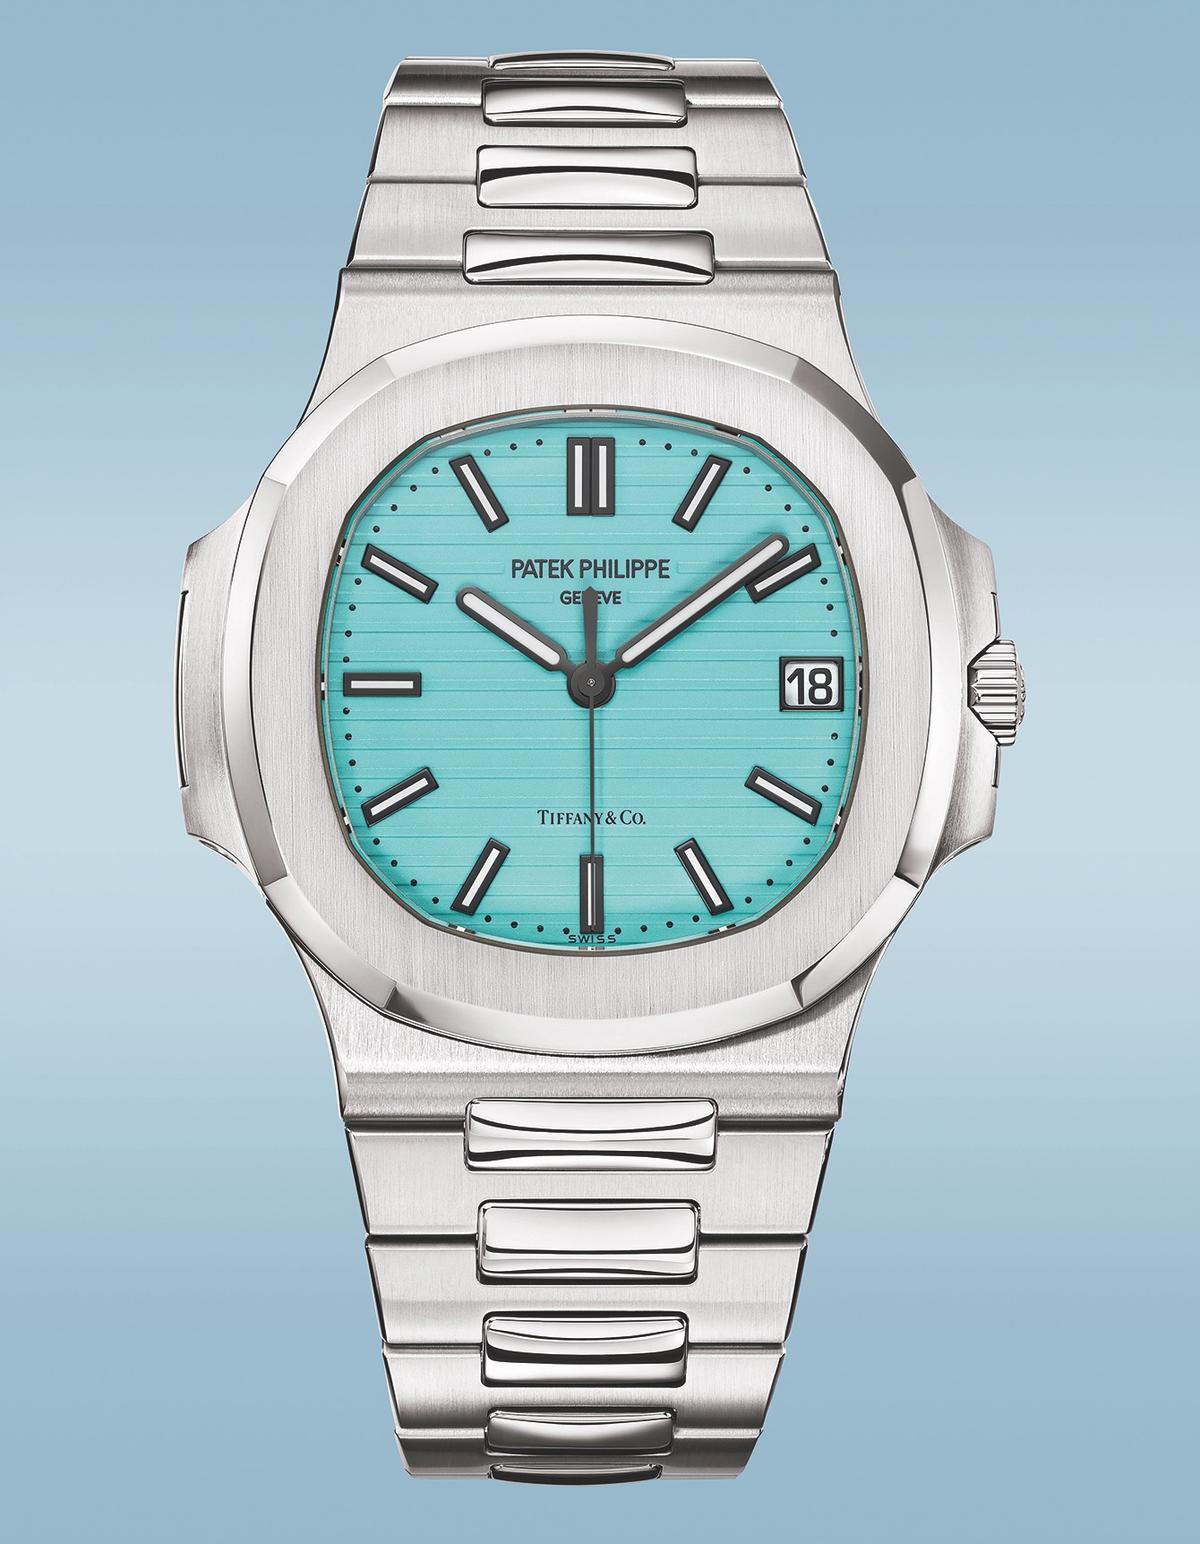 Patek Philippe Tiffany Blue Ref. 5711-1A-018 timepiece. (Courtesy of Patek Philppe)